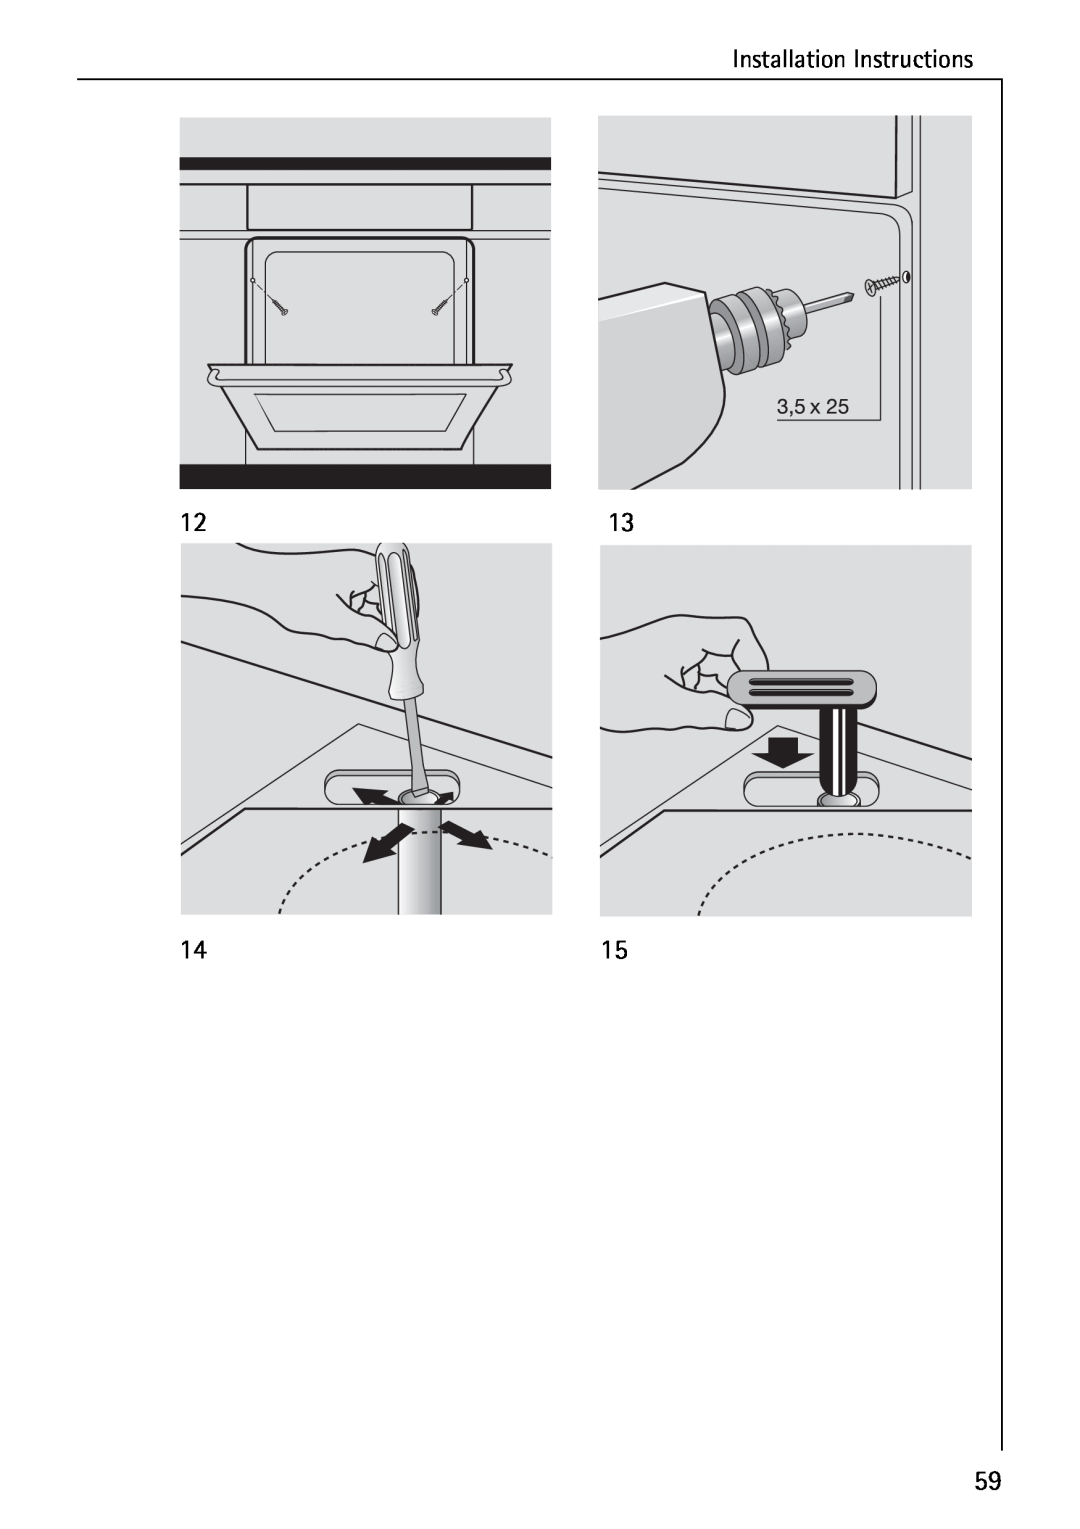 AEG E4100-1 manual Installation Instructions 